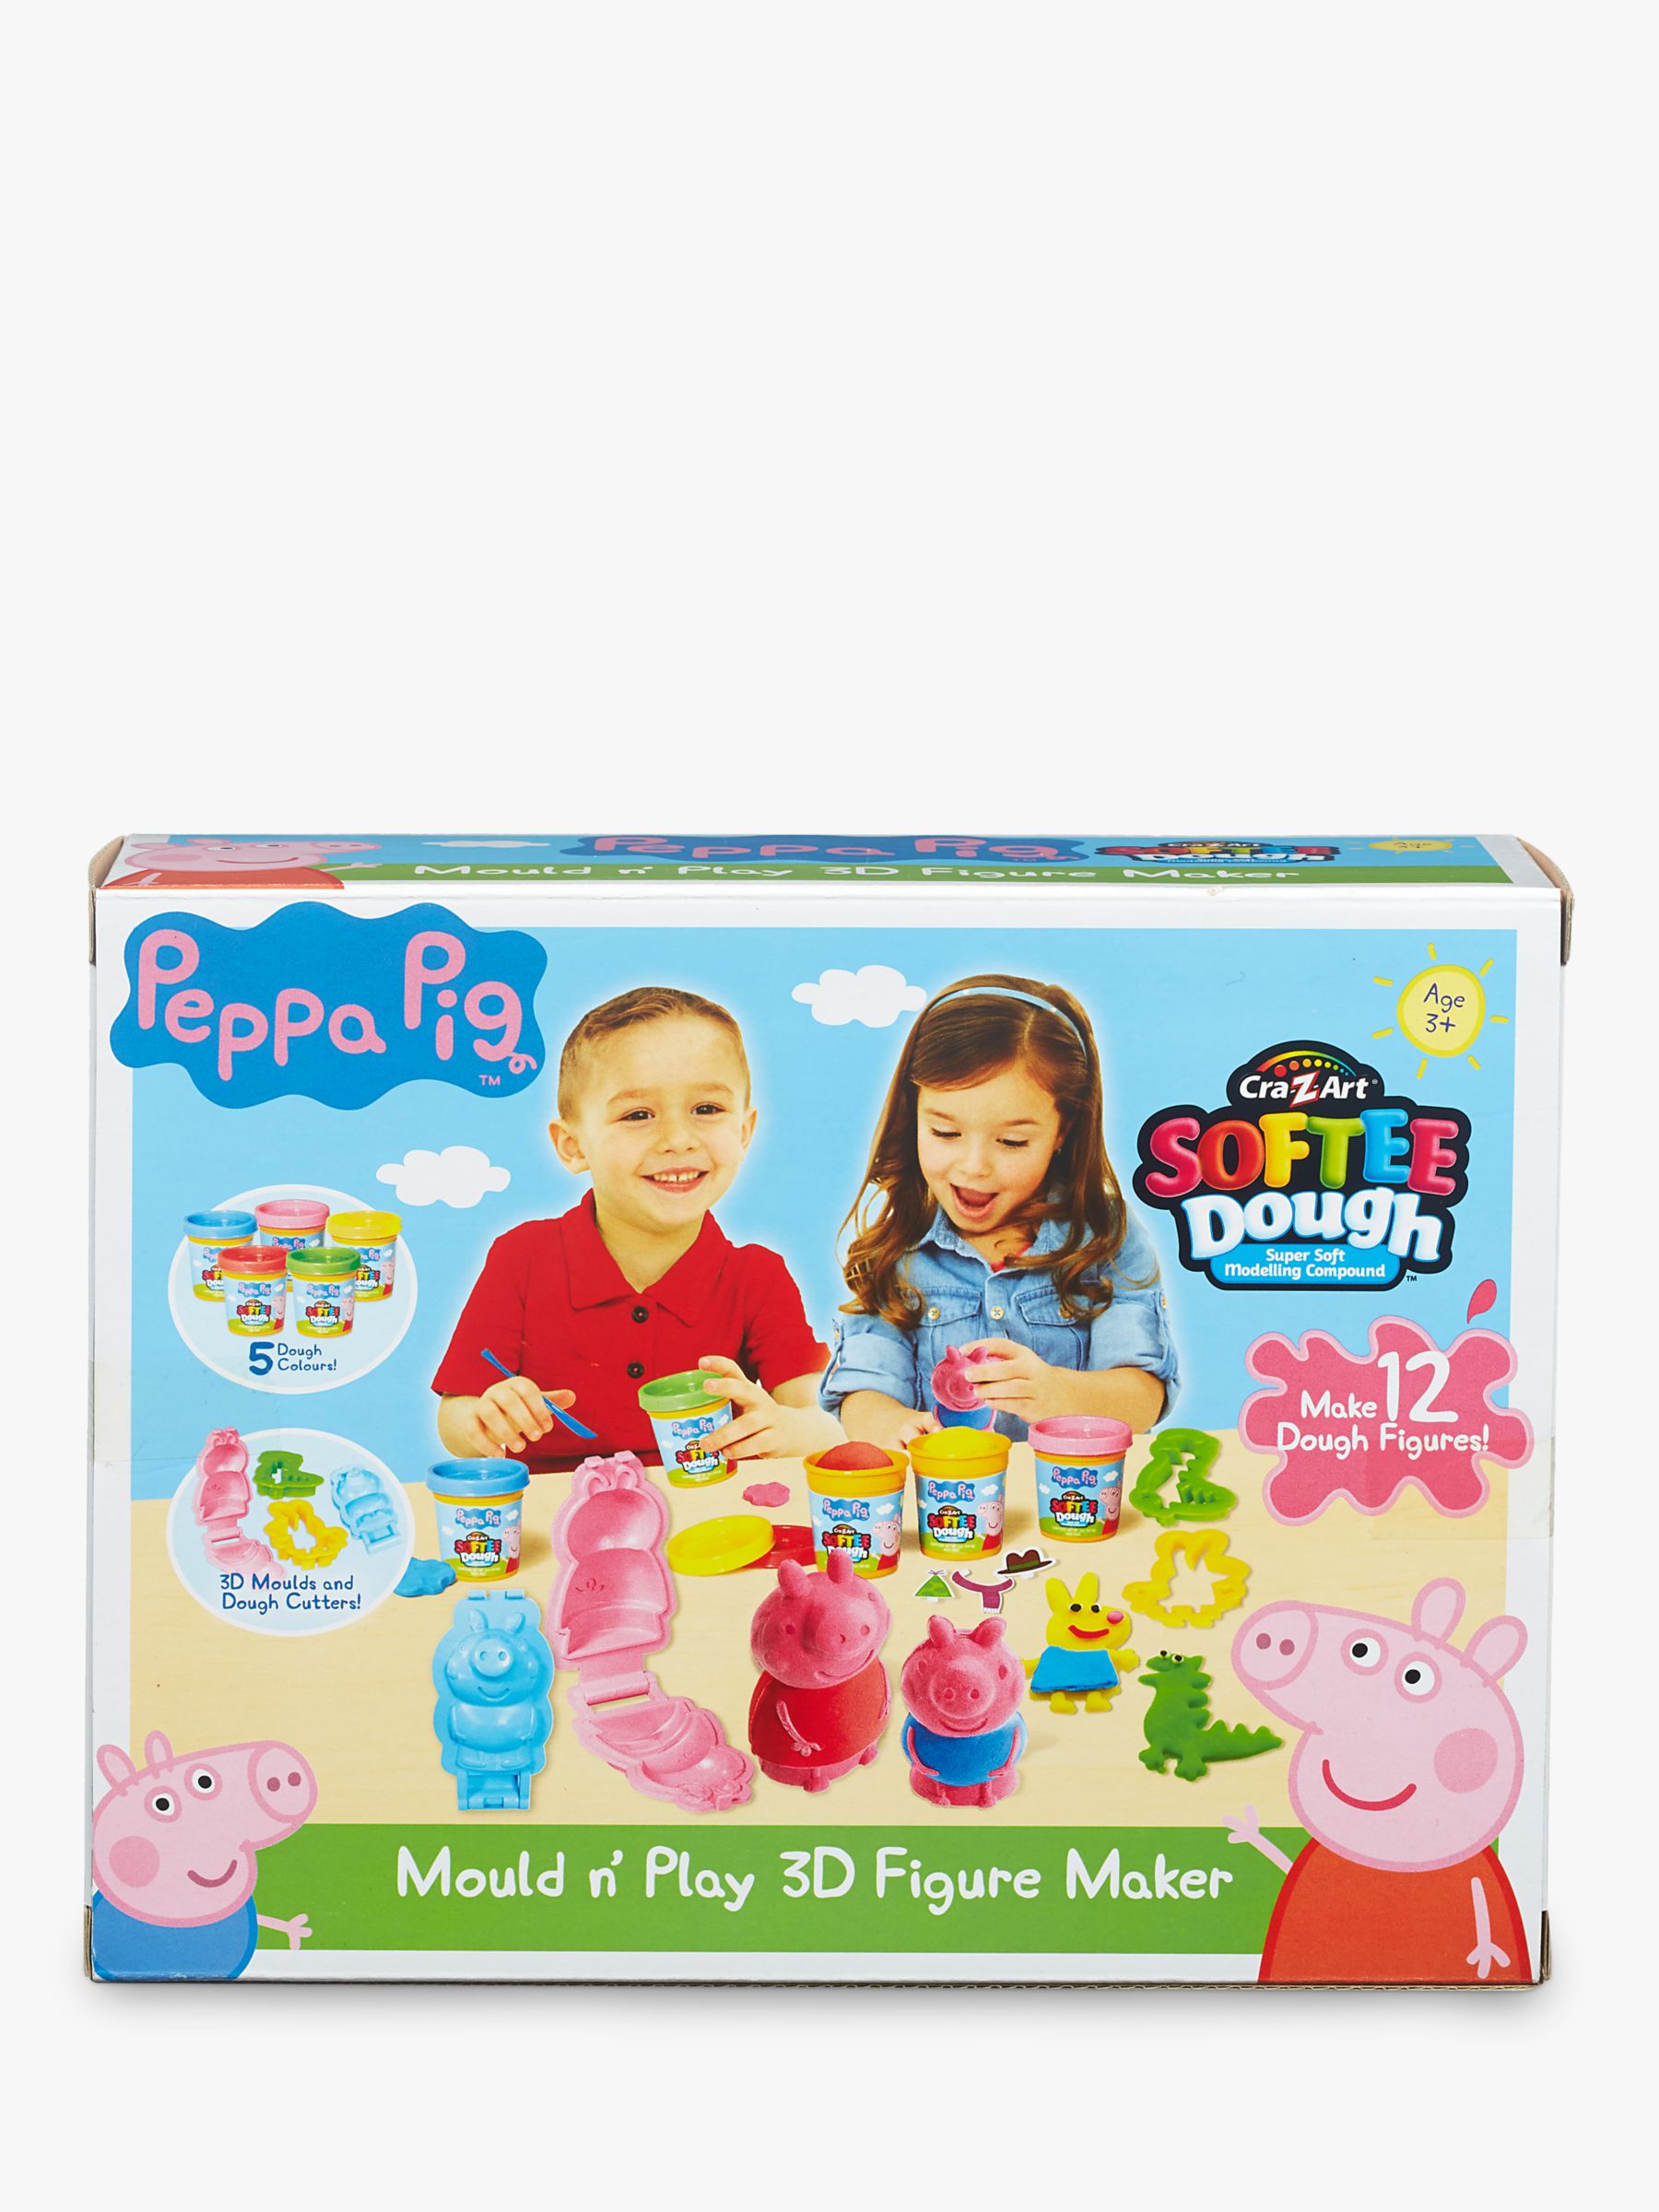 Peppa Pig Mold N Play Dough Figure Maker 